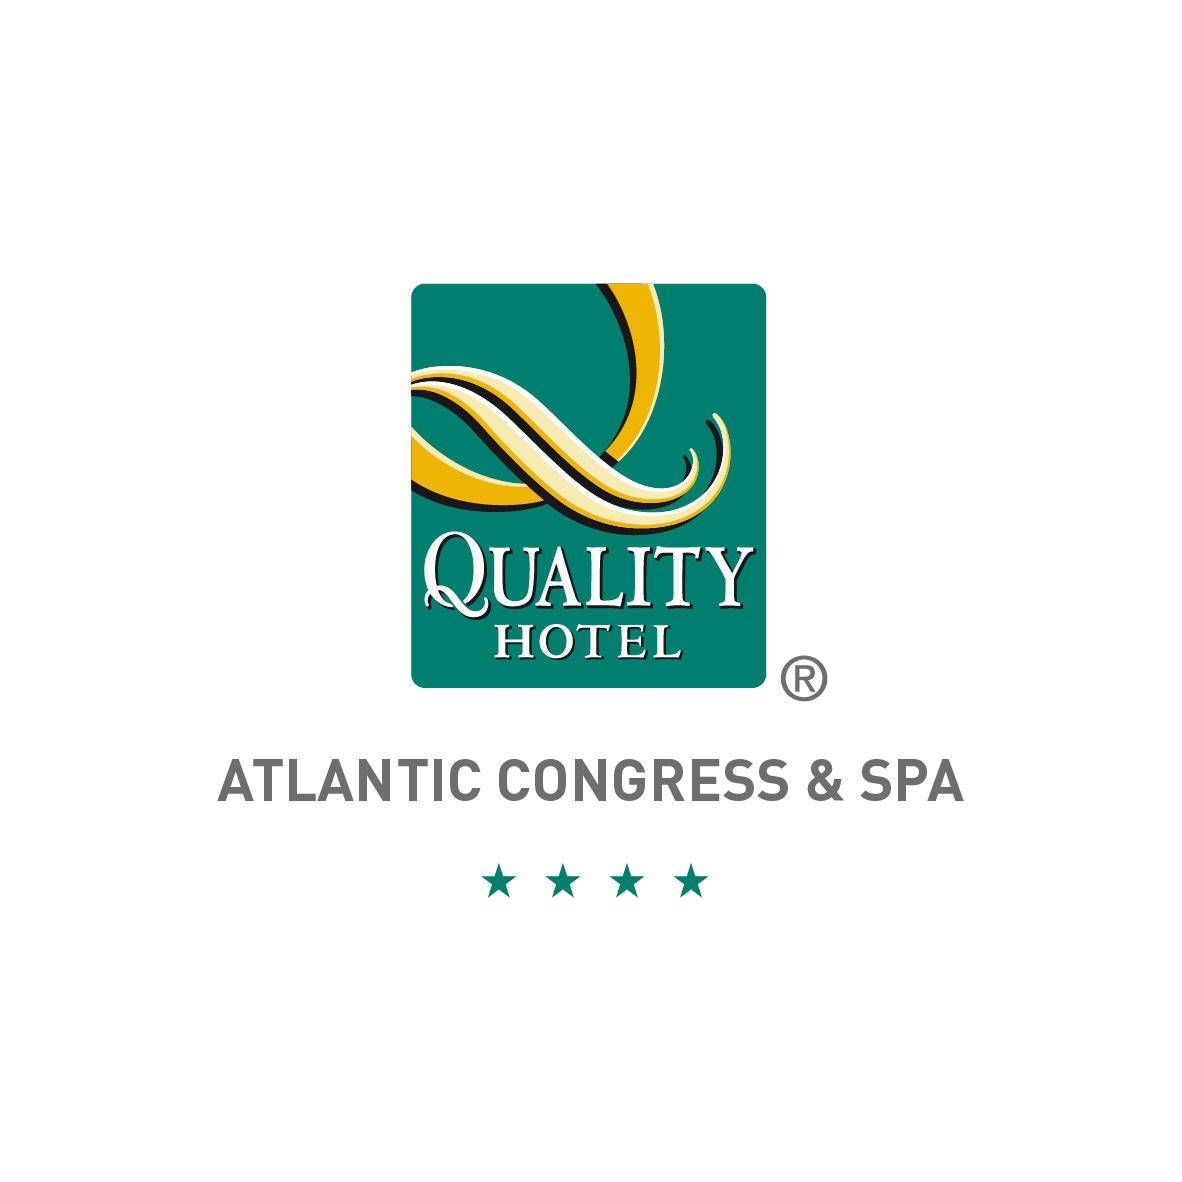 09 - Quality Hotel Atlantic Congress_Tavola disegno 1